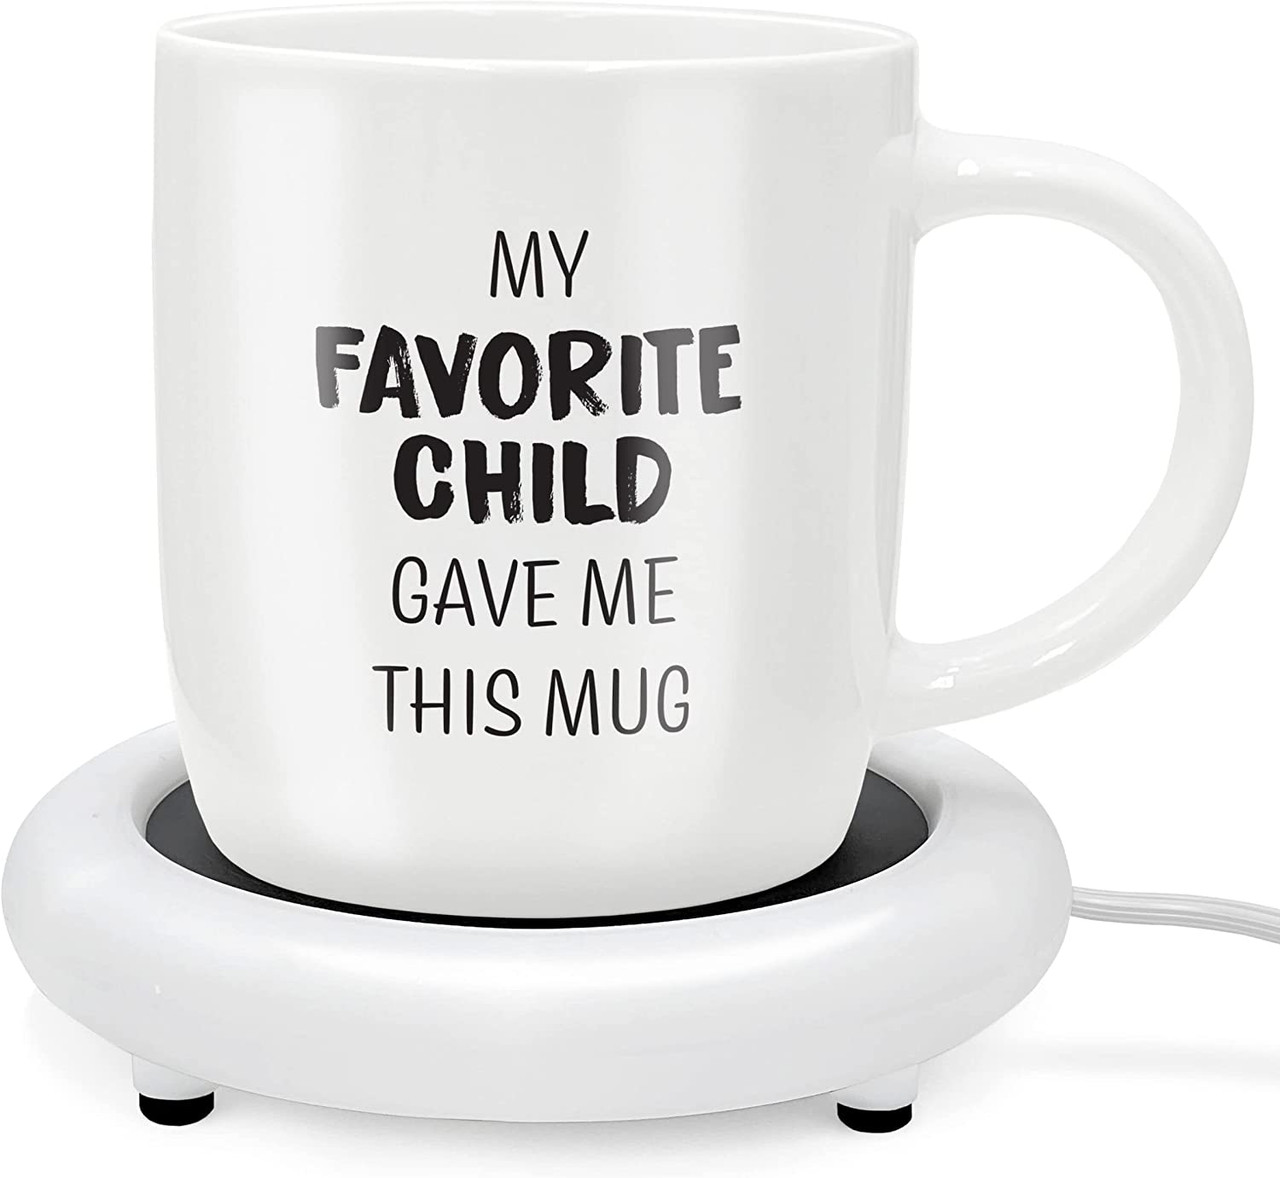 Mom-Themed 12-Ounce Electric Heated Coffee Mug product image